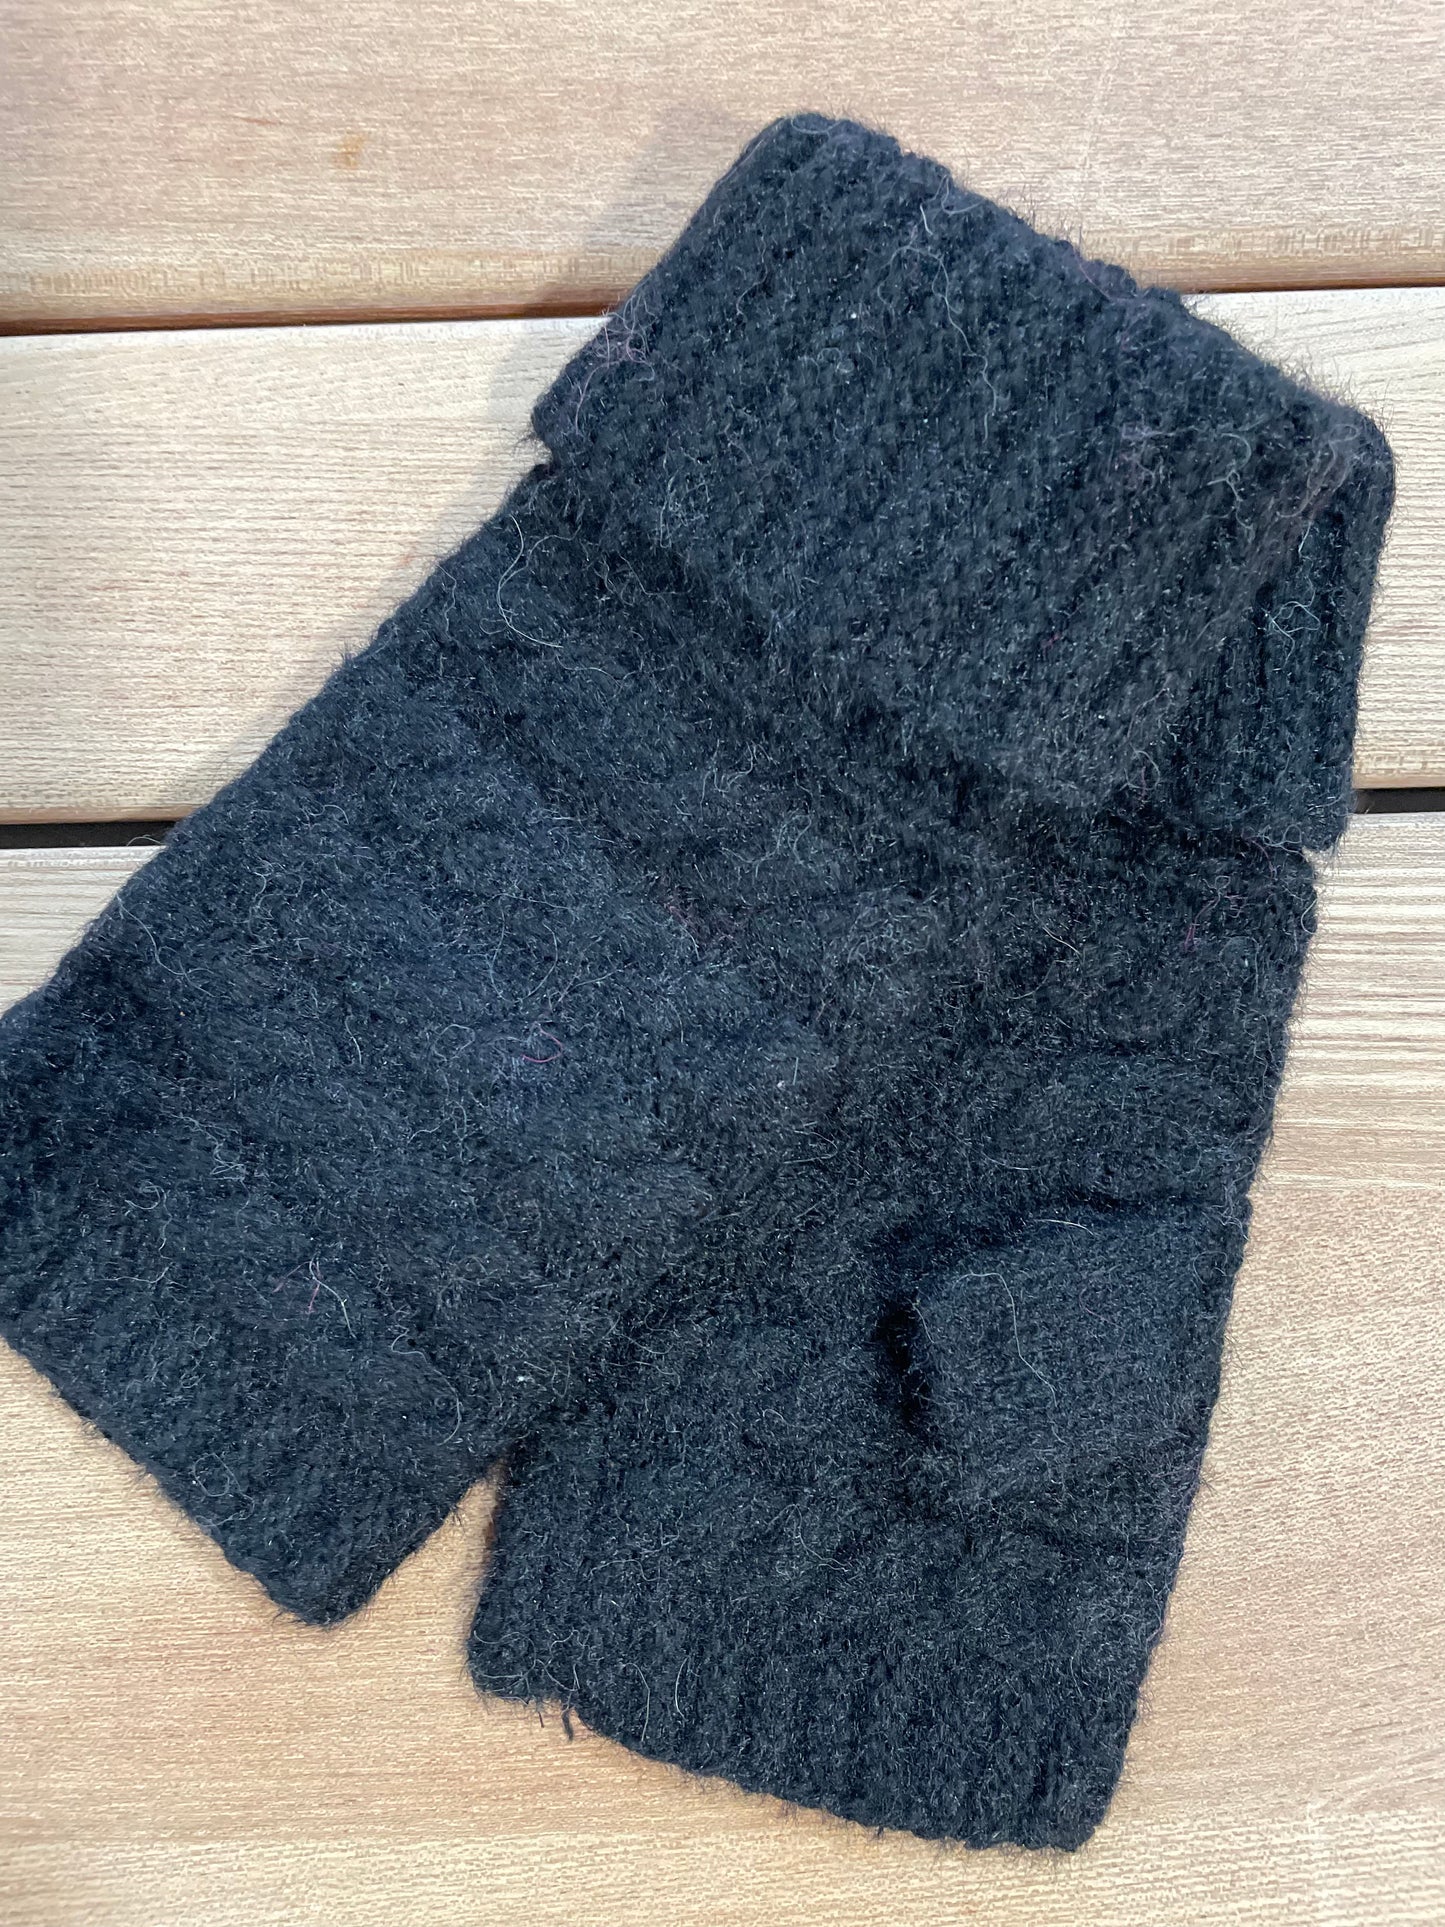 Gloves Mittens Knit Black